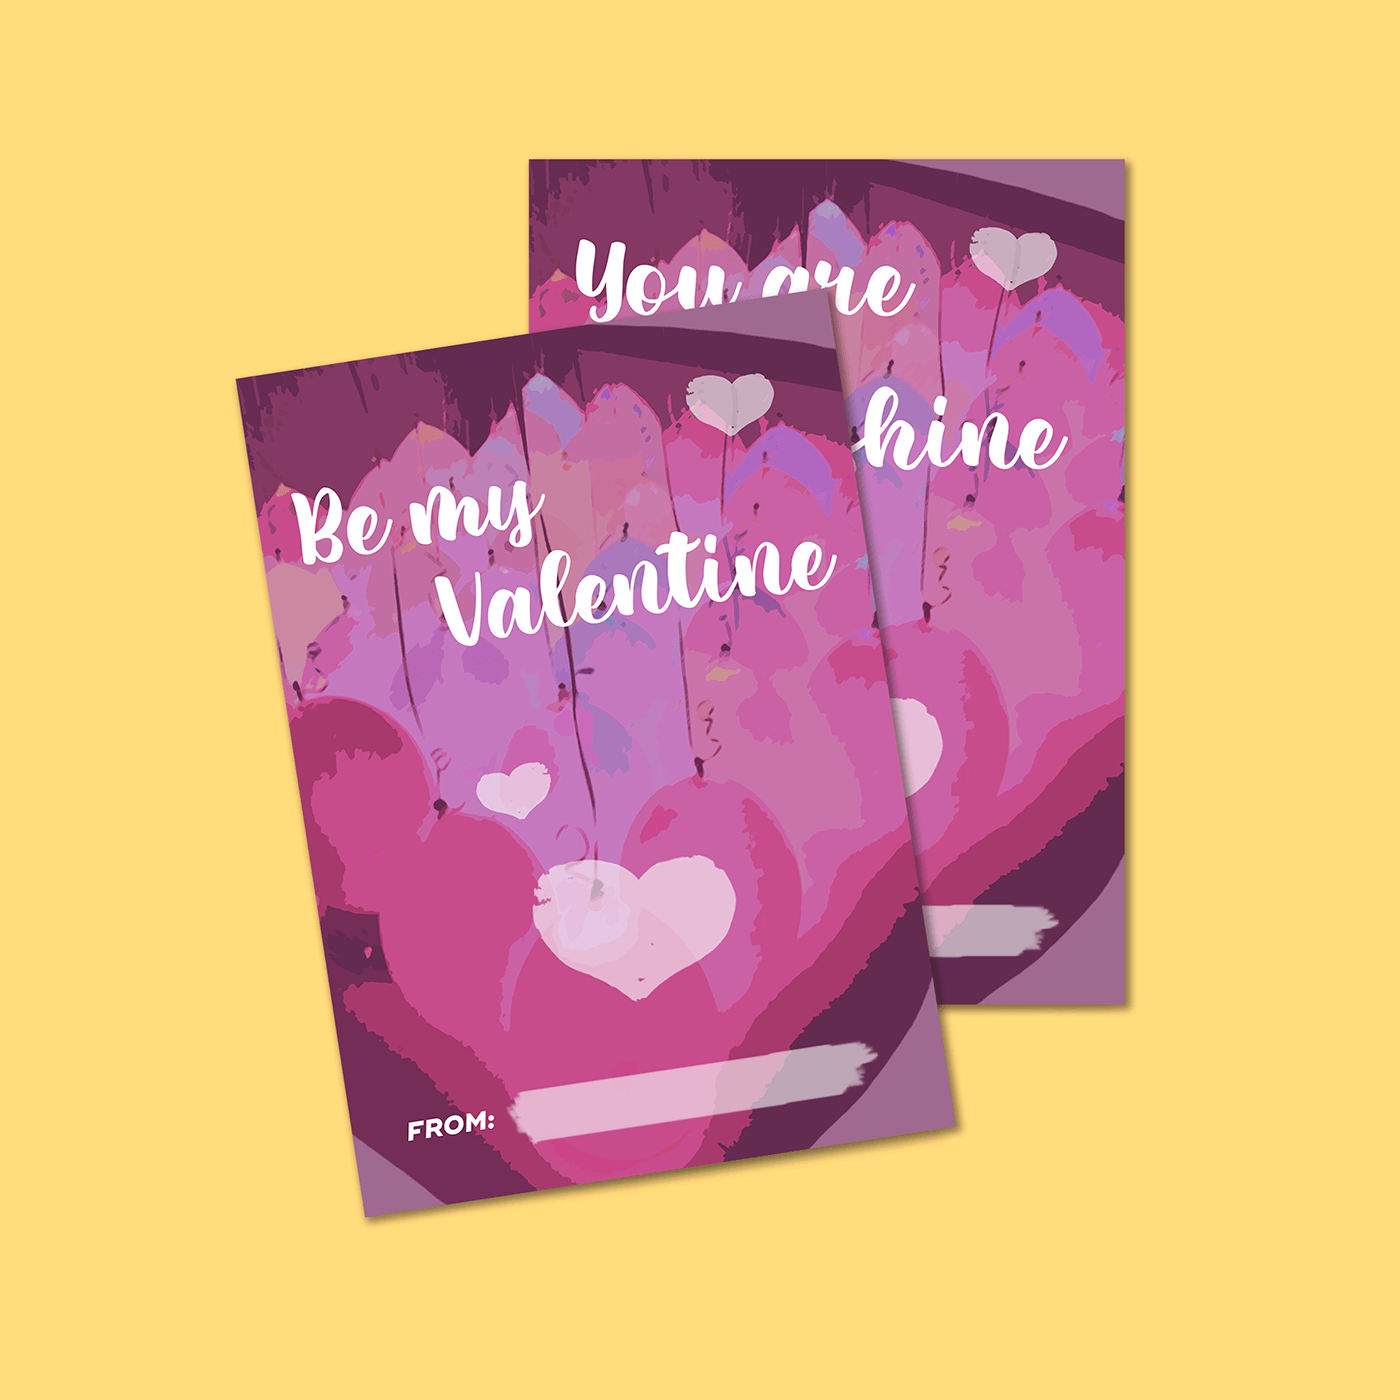 Valentine's Day valentine card cards Cards design graphic design  print design  Valentine's prints